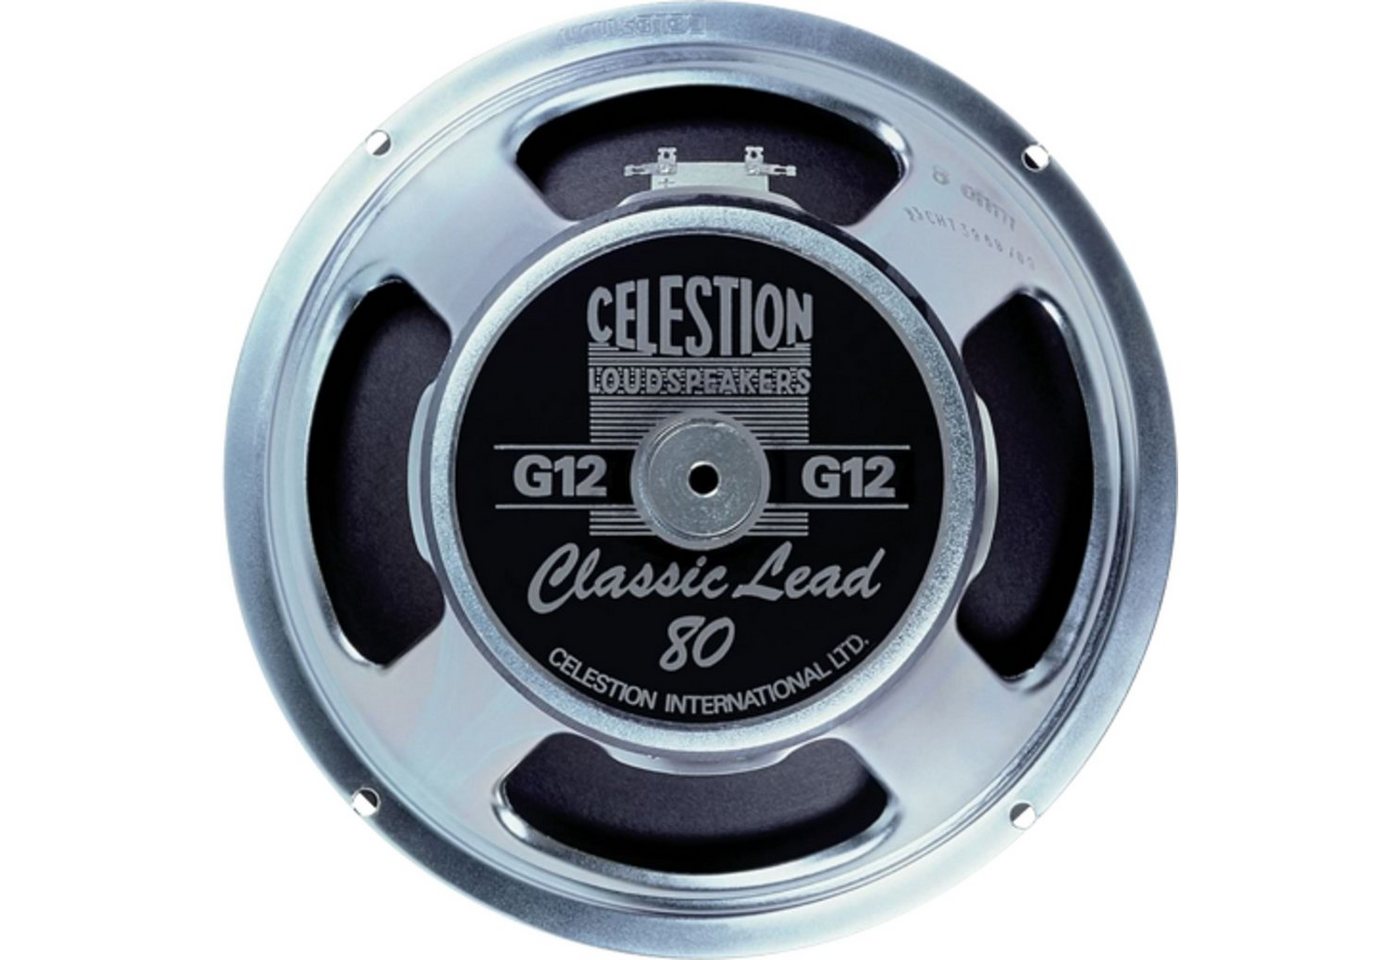 Celestion Lautsprecher (Classic Lead 80 12 8 Ohm - Gitarrenlautsprecher)" von Celestion